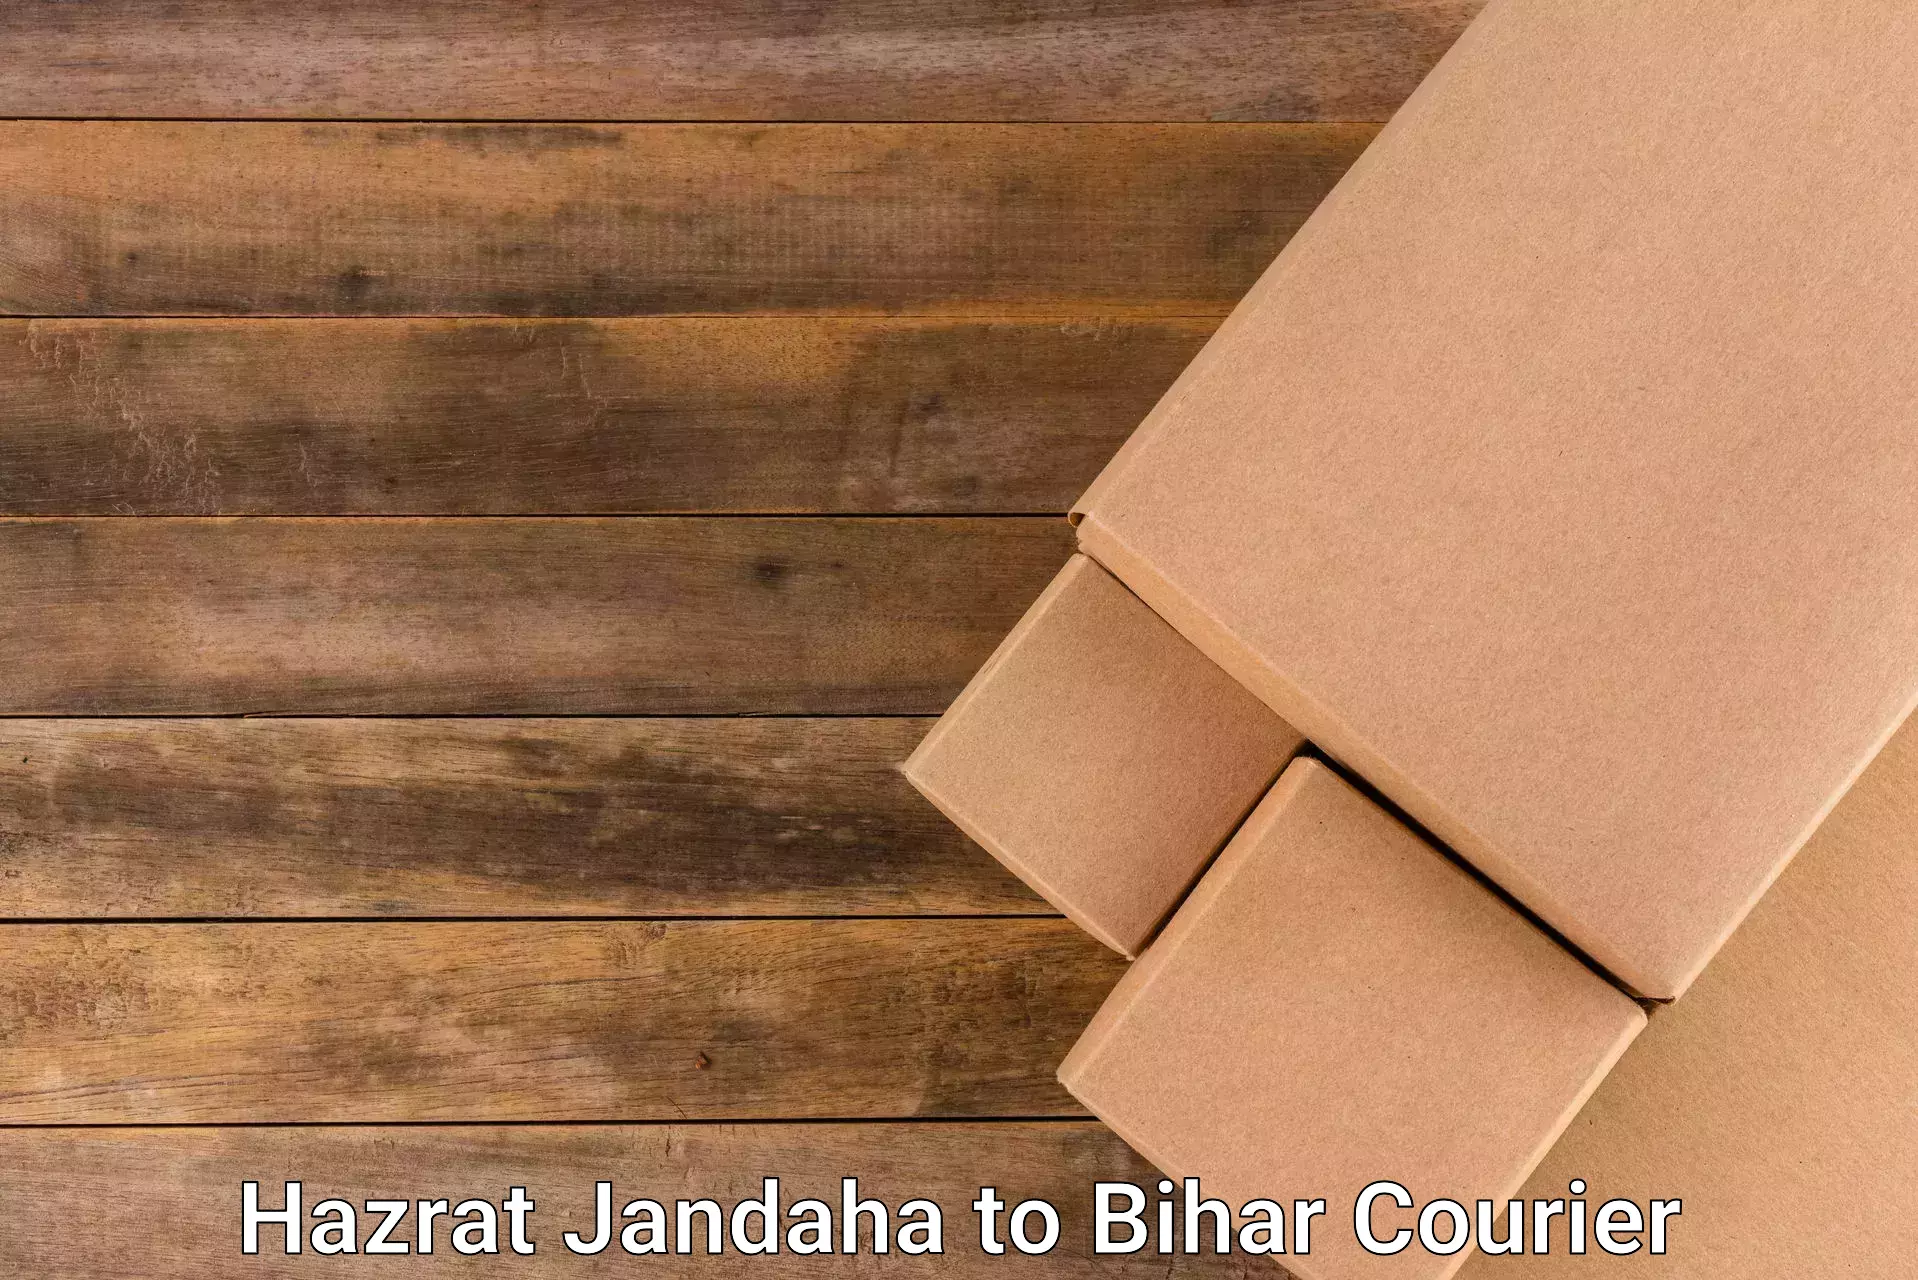 High-speed parcel service Hazrat Jandaha to Bihar